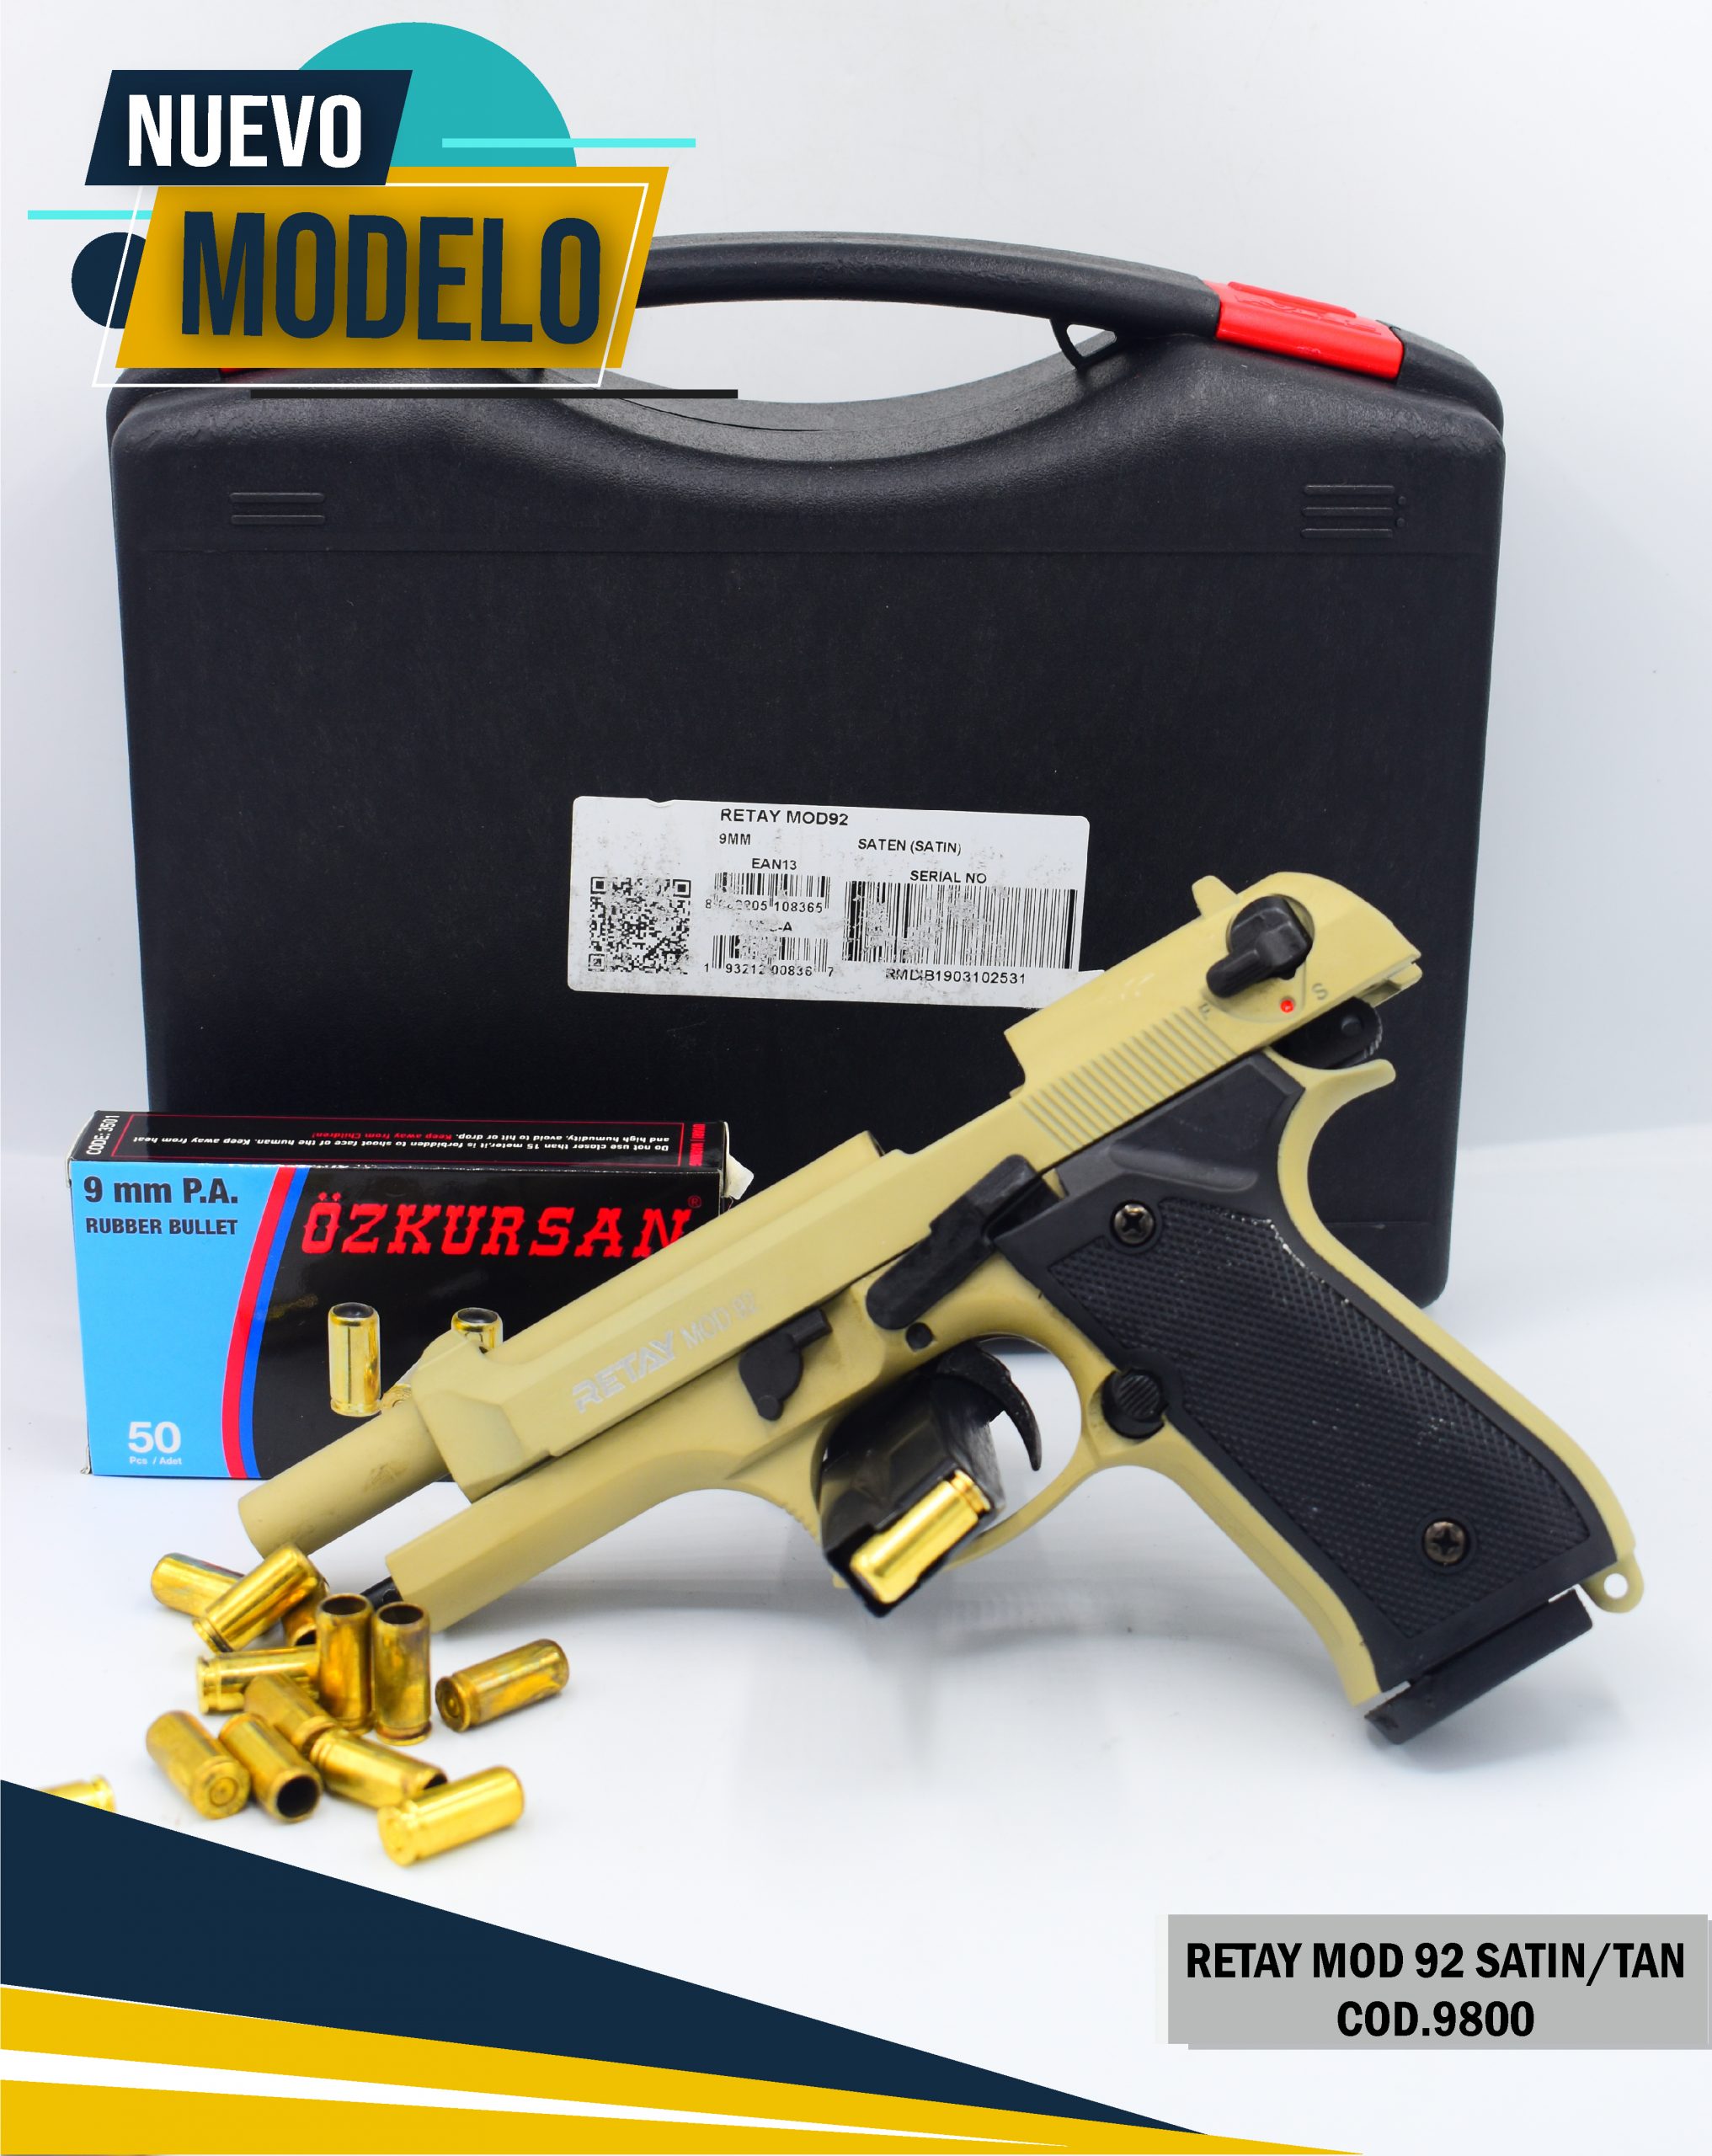 Pistola Traumatica Retay Modelo 92, Arme Desarme y Ensayo WhatsApp  3125286943 Airguns Colombia 